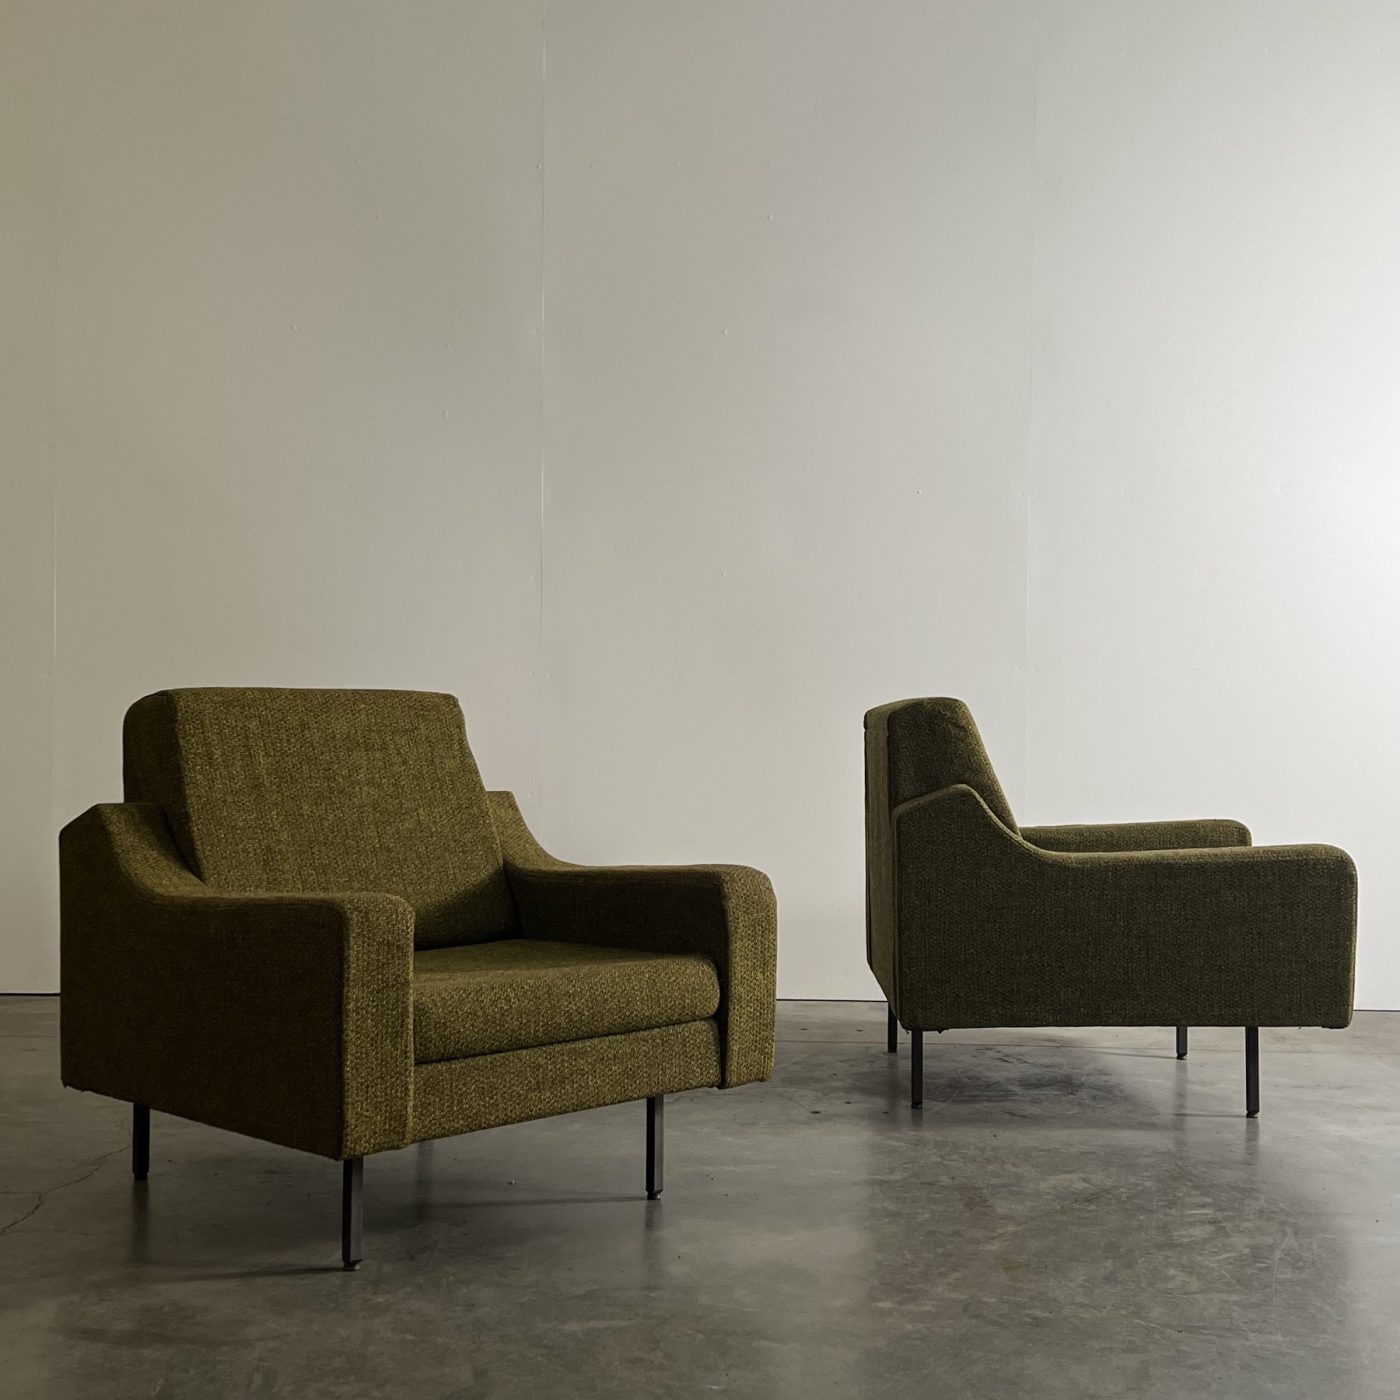 objet-vagabond-rmidcentury-armchairs0010